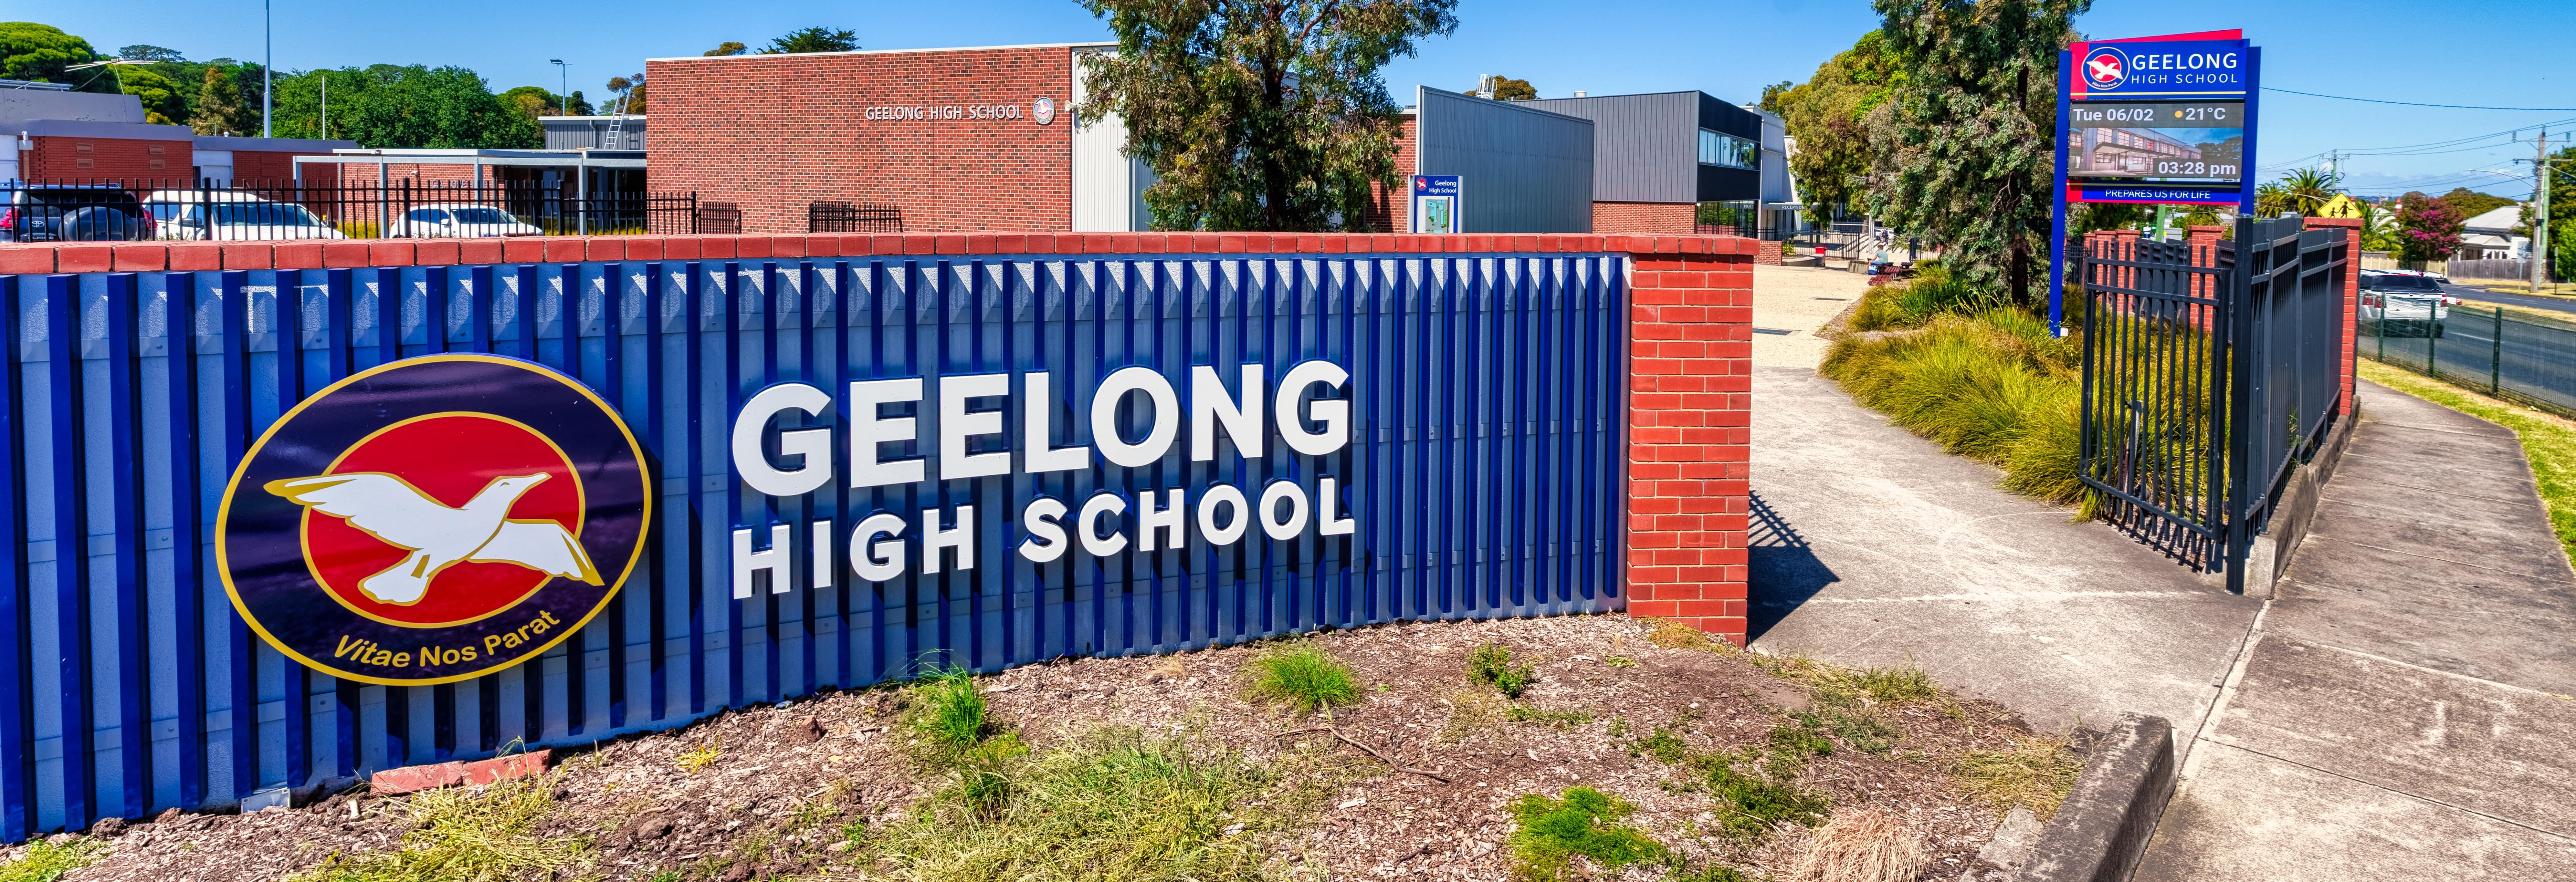 Geelong High School